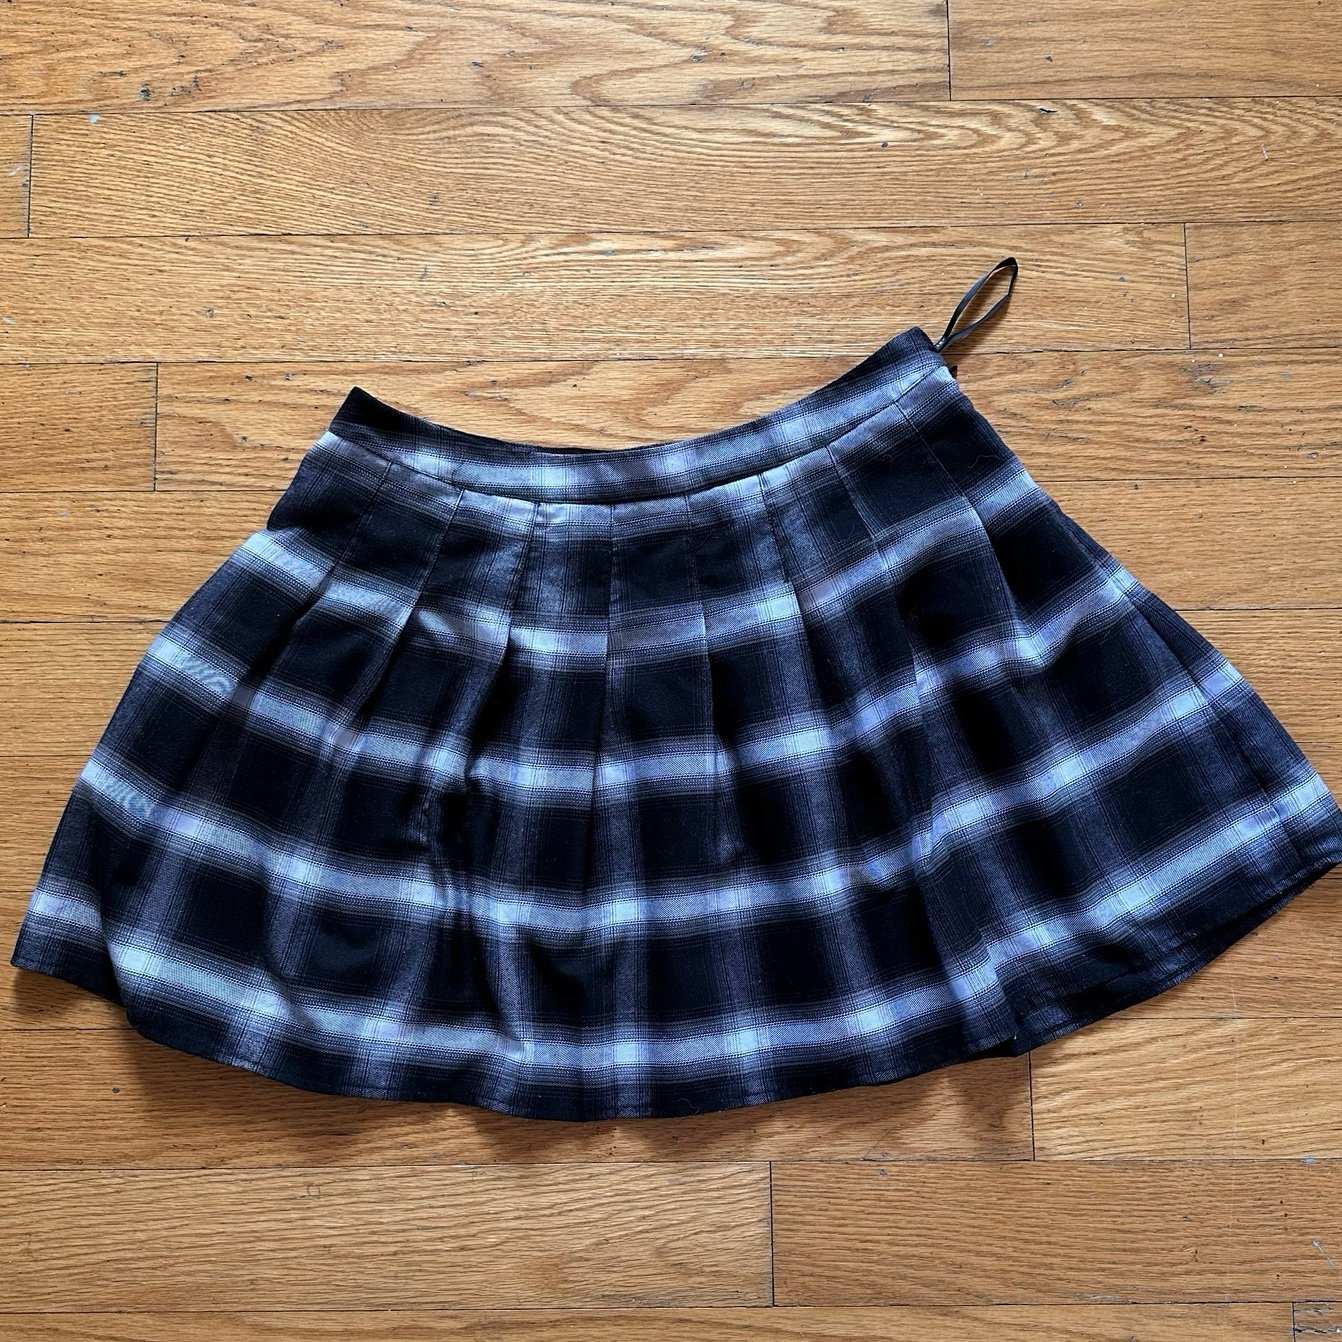 floor price Women’s black and white plaid skirt size 12